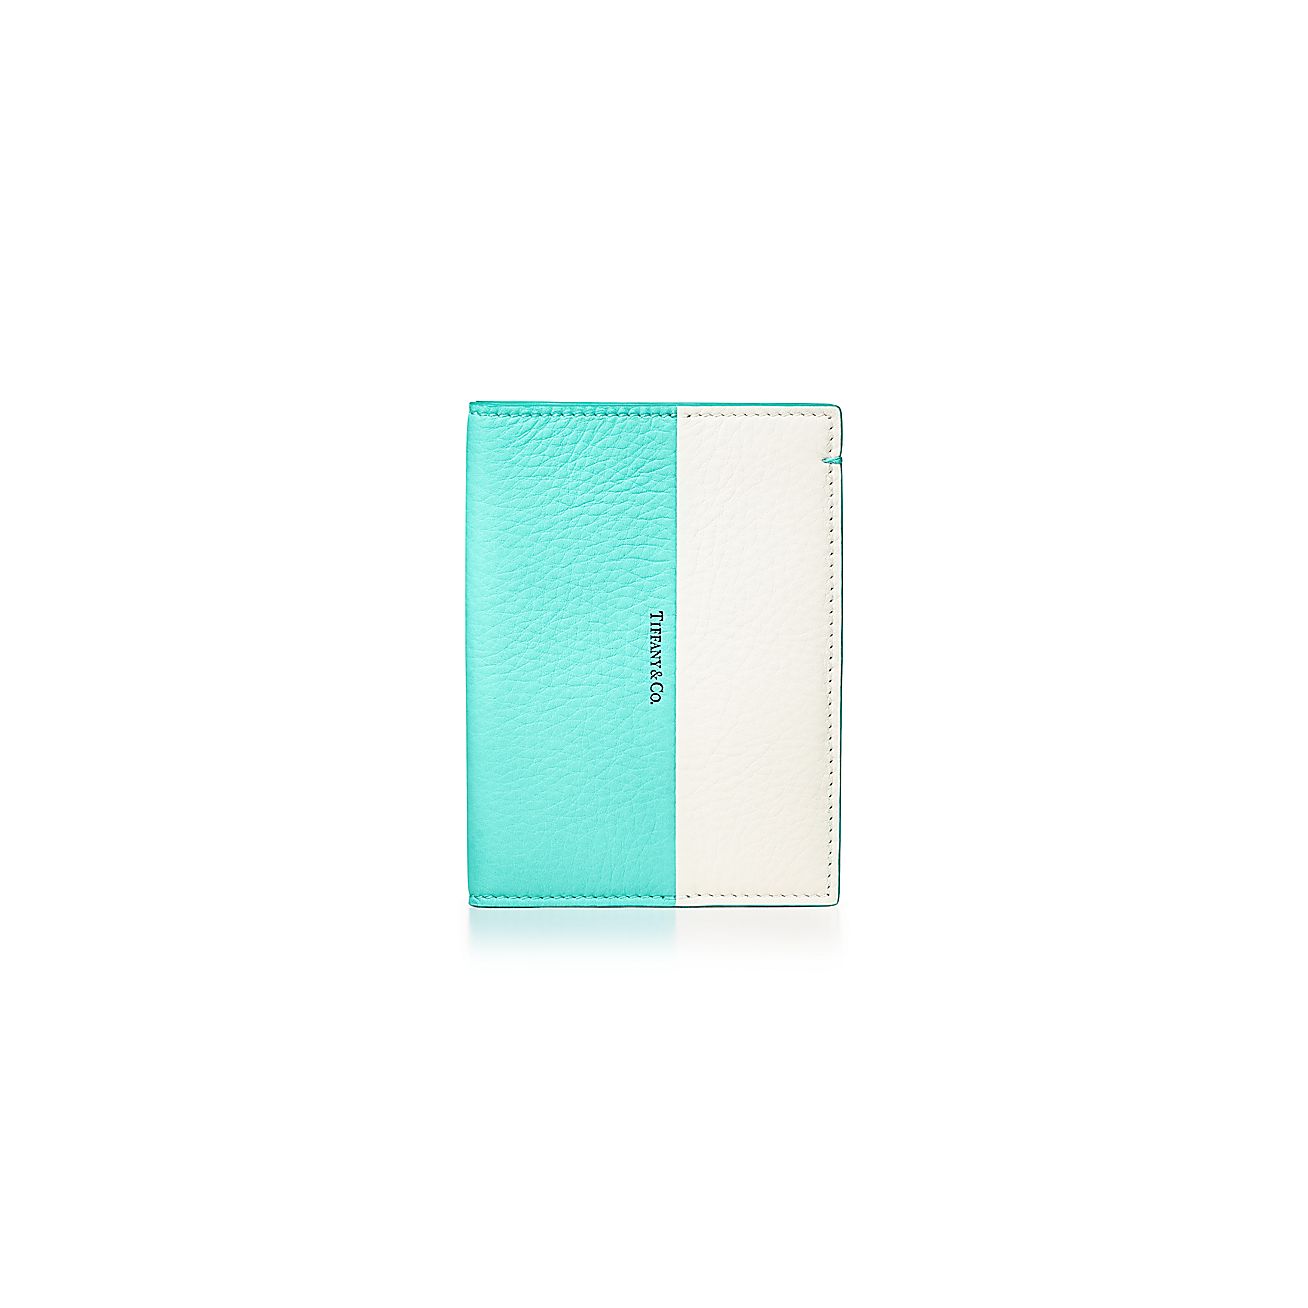 Color Block Passport Cover In Off White And Tiffany Blue Grain